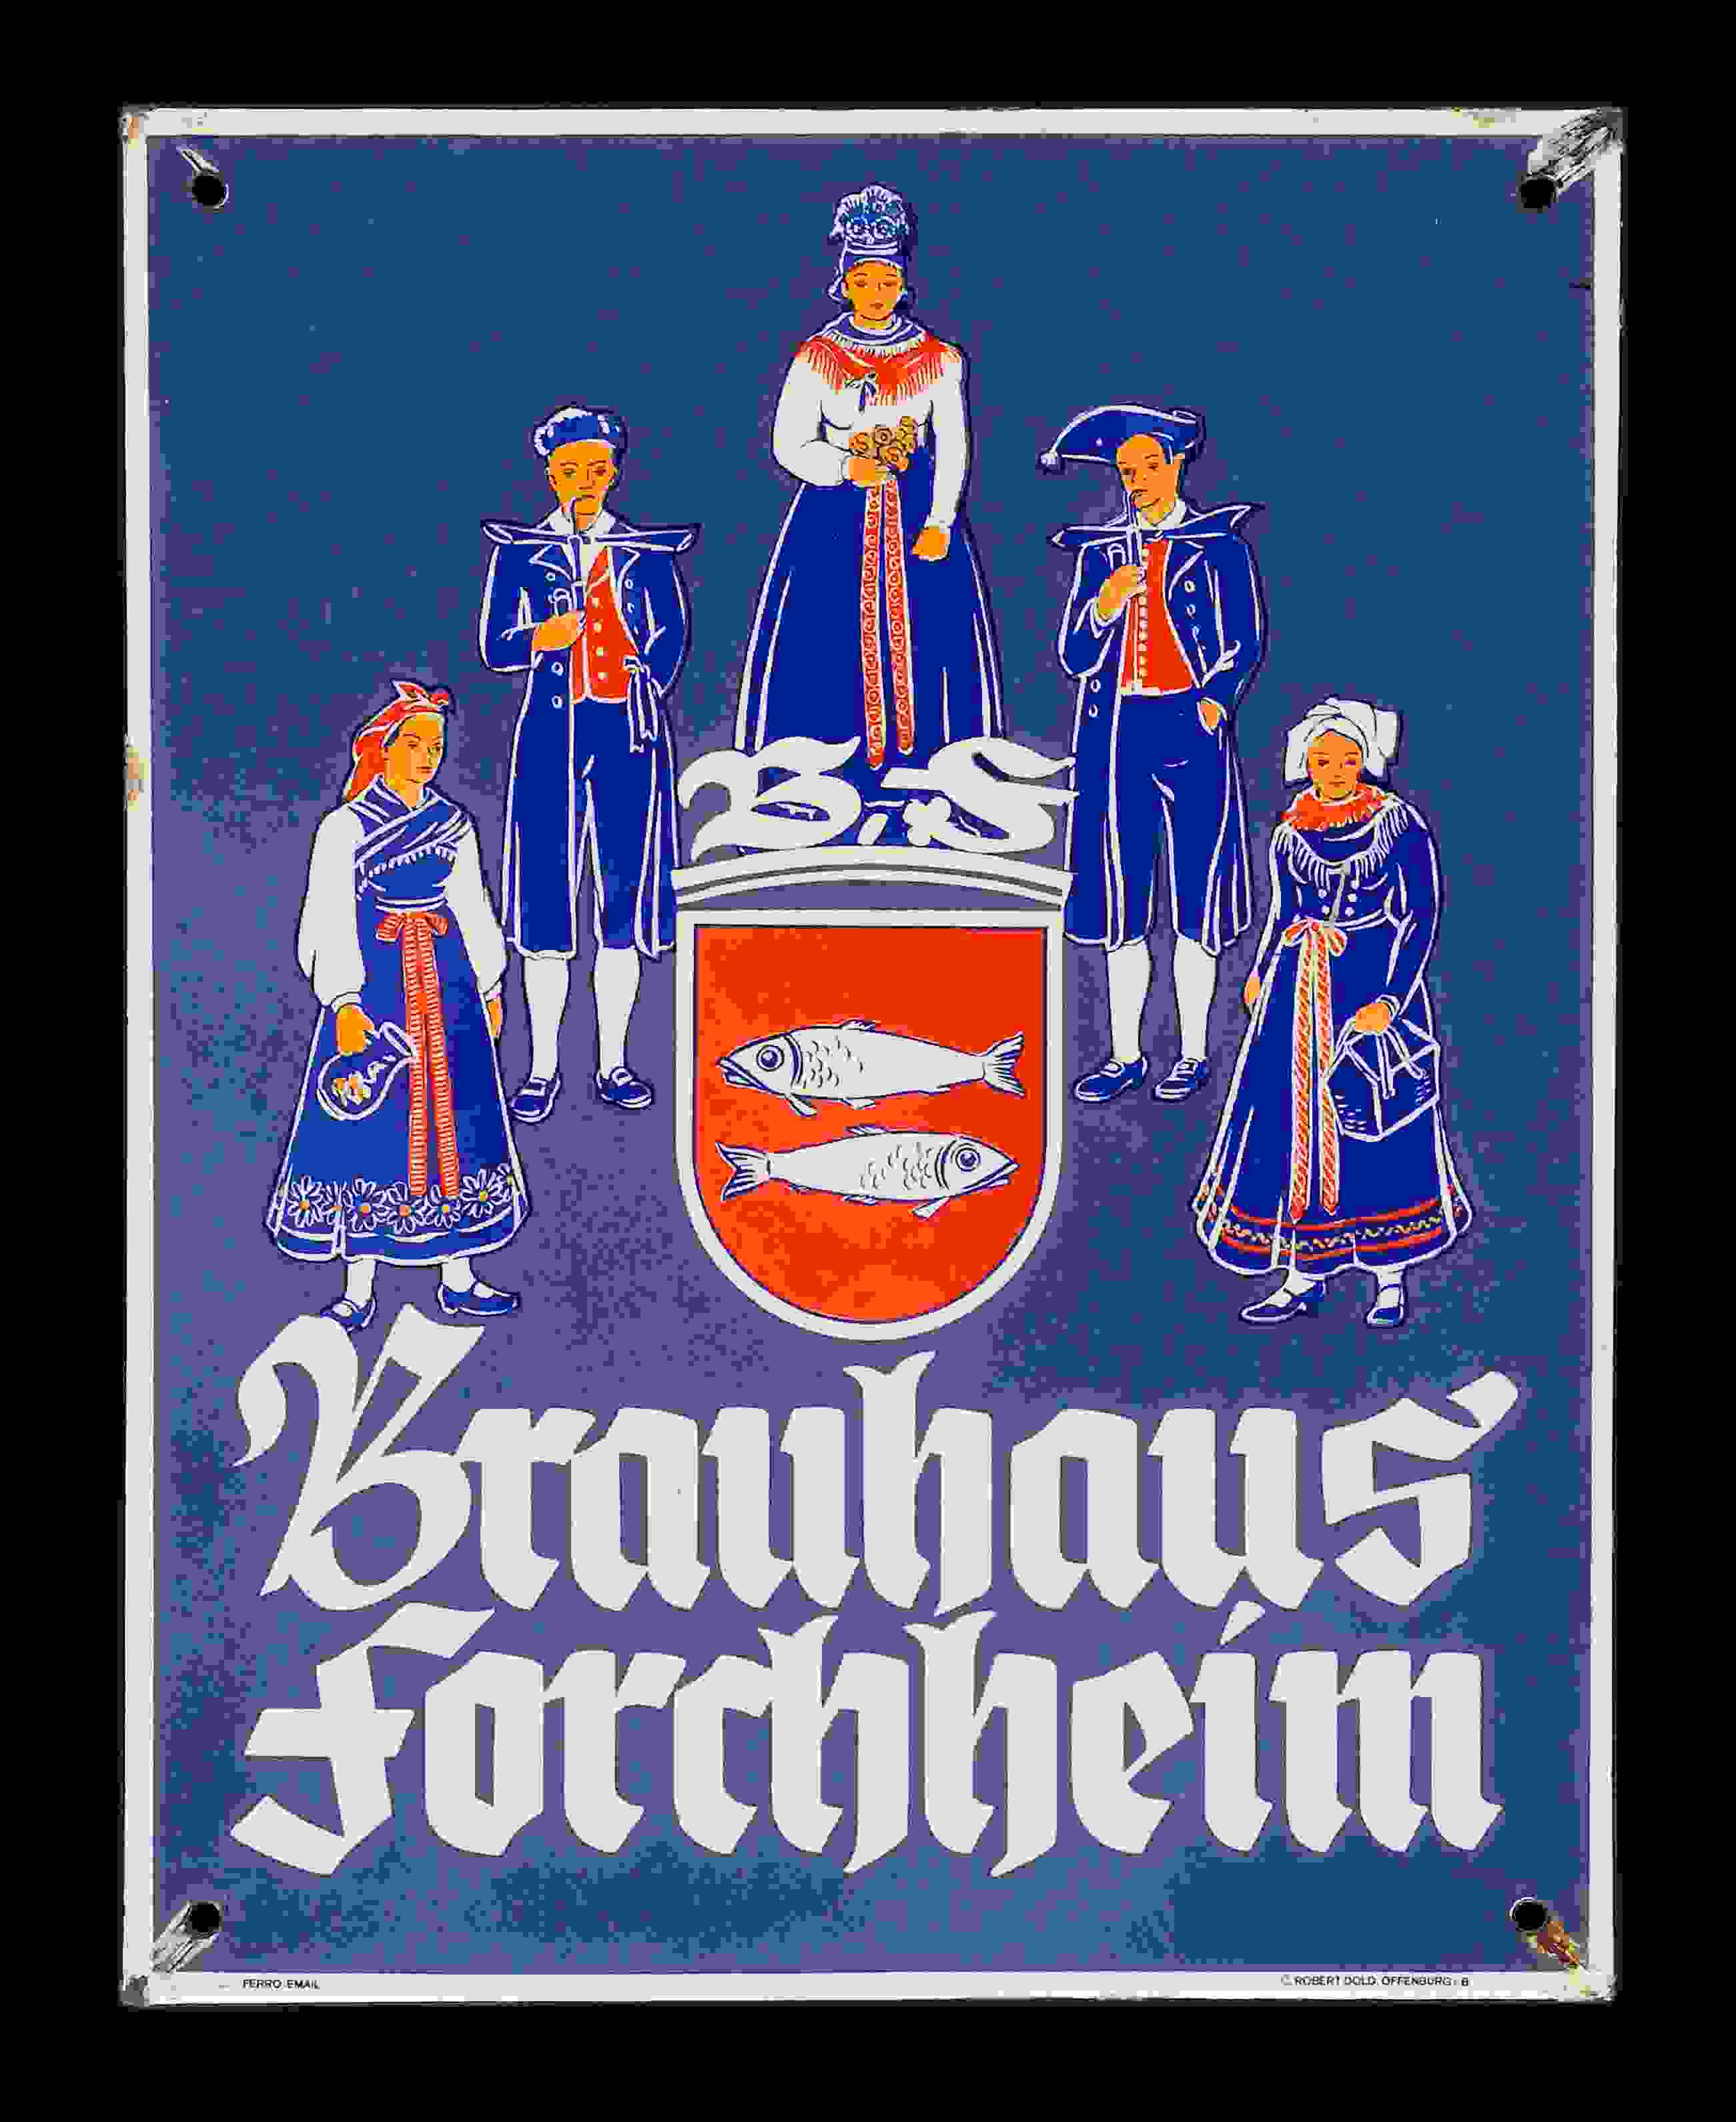 Brauhaus Forchheim 